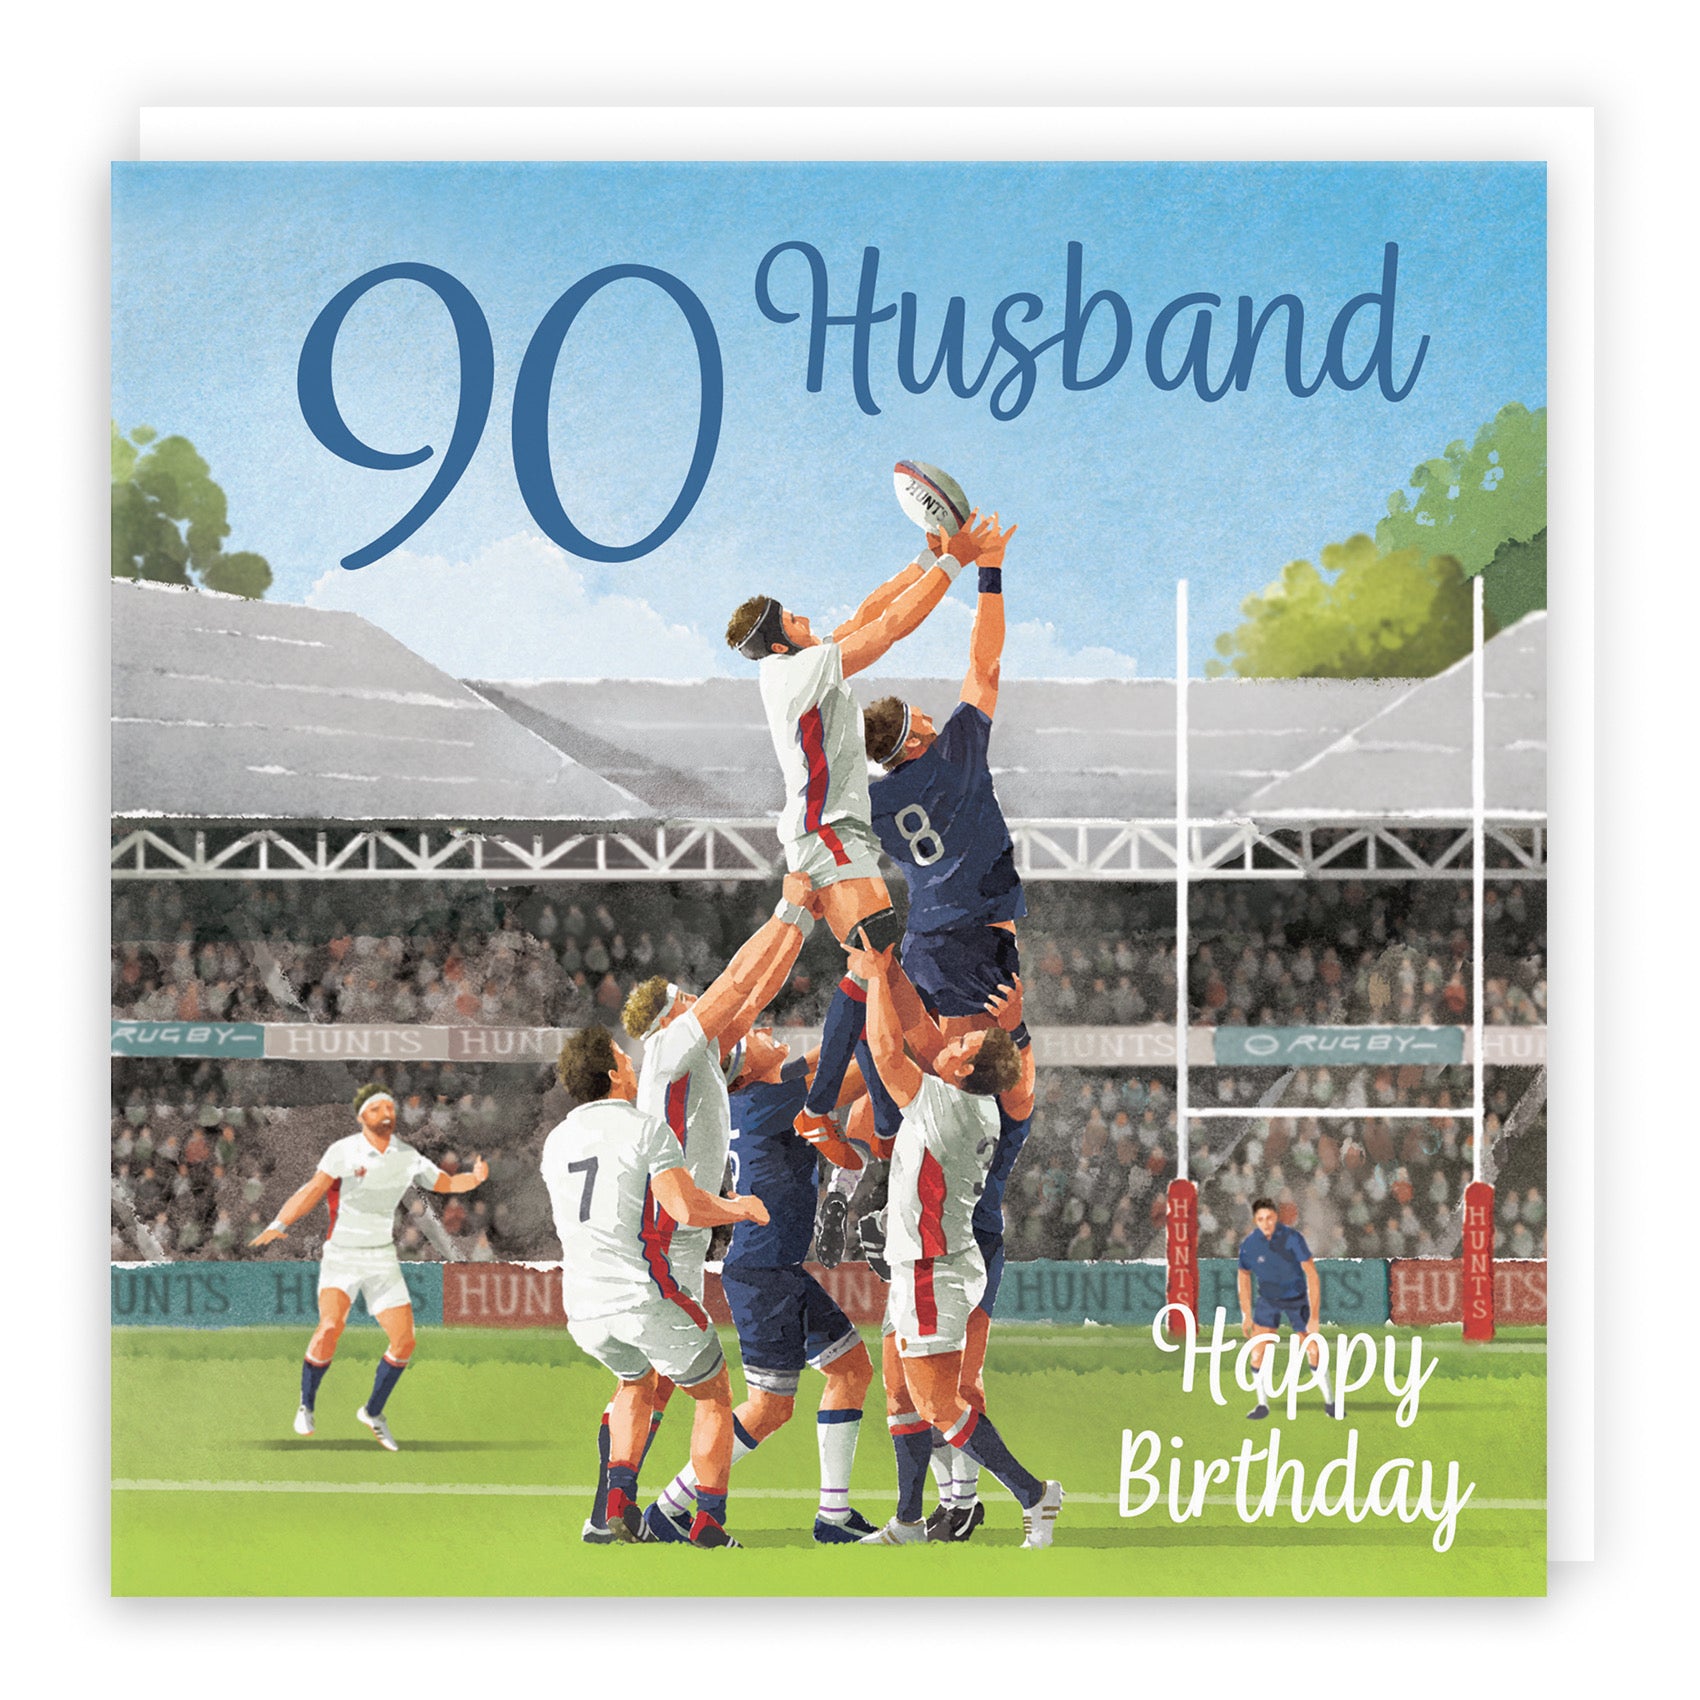 90th Husband Rugby Birthday Card Milo's Gallery - Default Title (B0CPQV24JY)